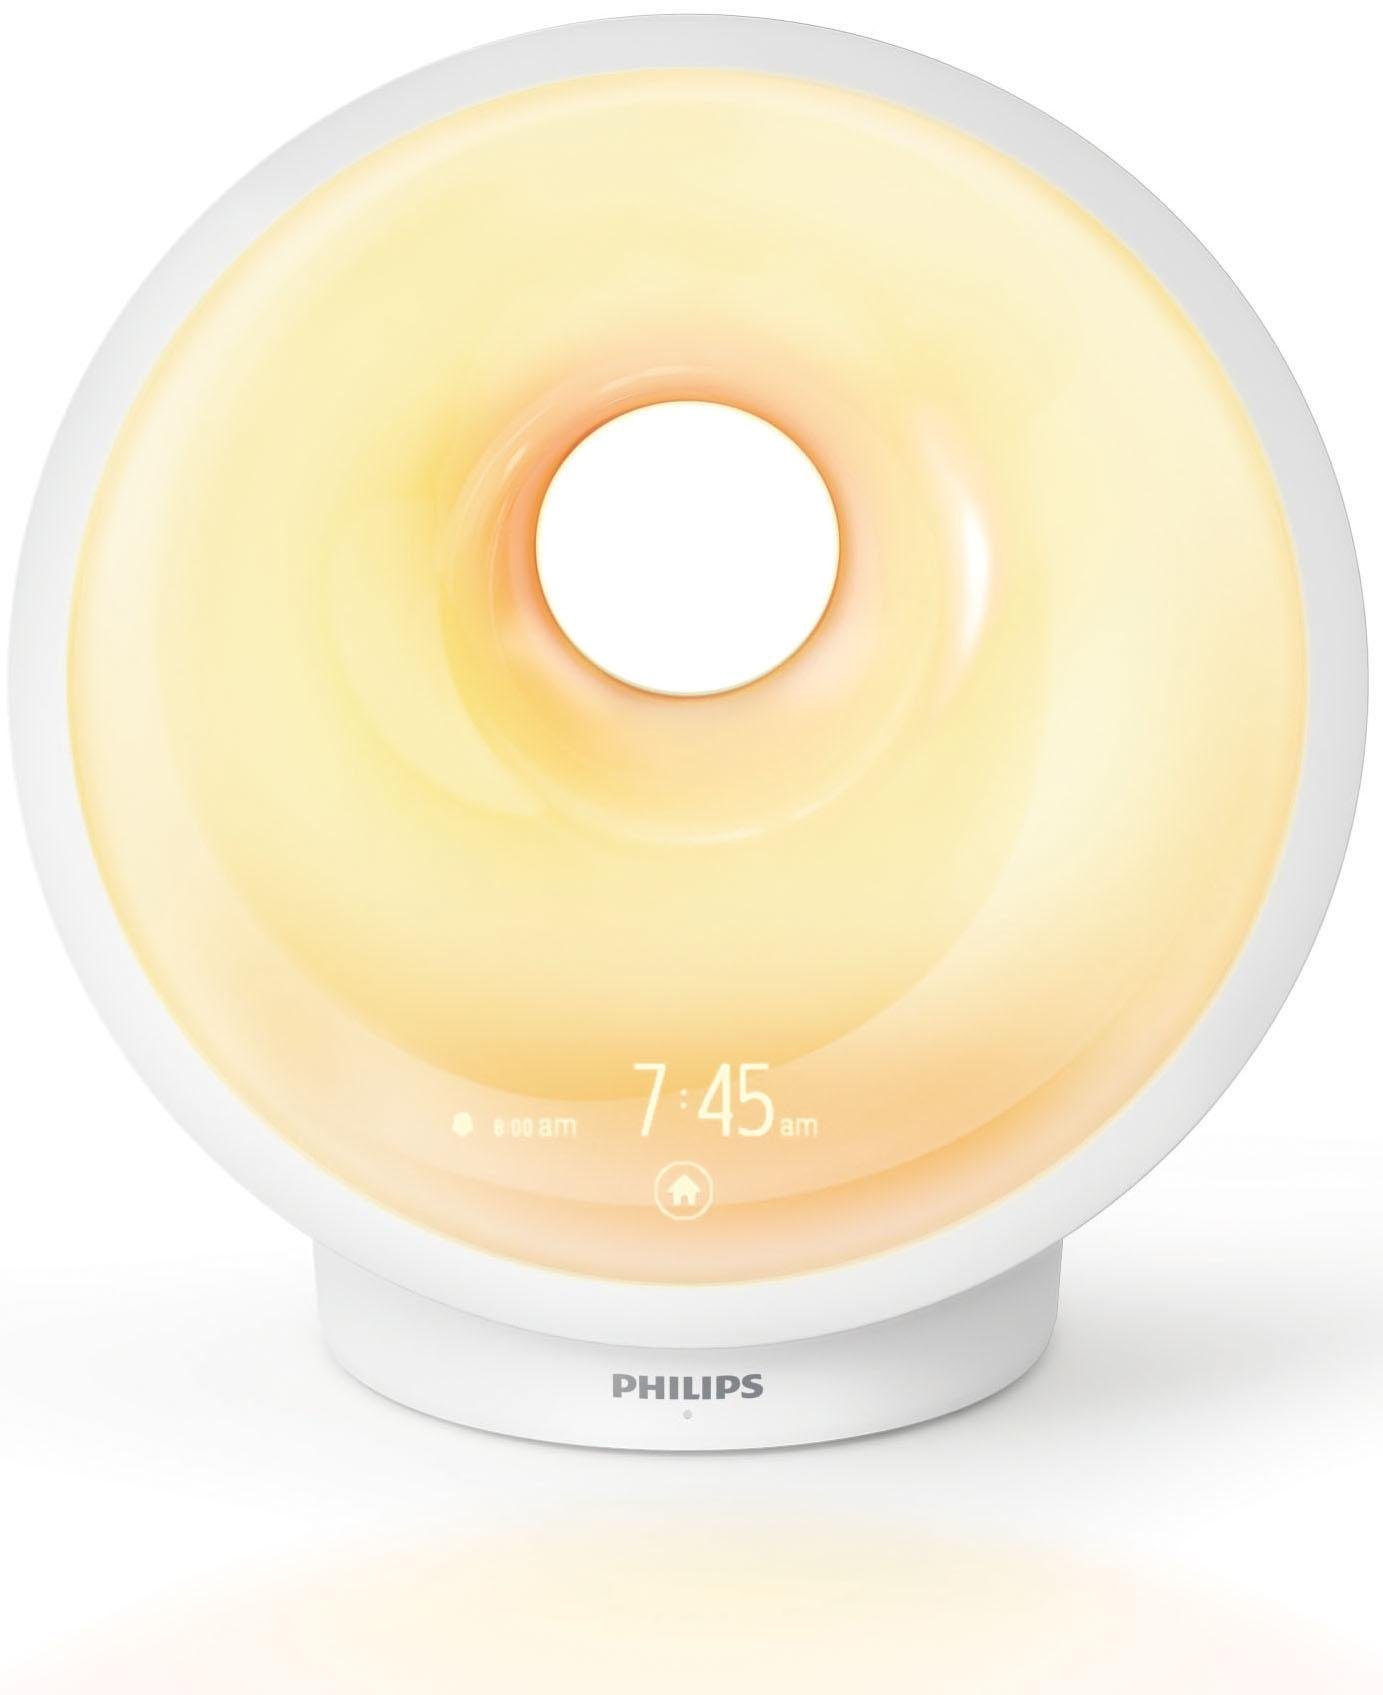 heb vertrouwen eindpunt Polijsten Philips Daglichtwekker HF3651/01 Wake Up Light met gesimuleerde zonsopkomst  vind je bij | OTTO